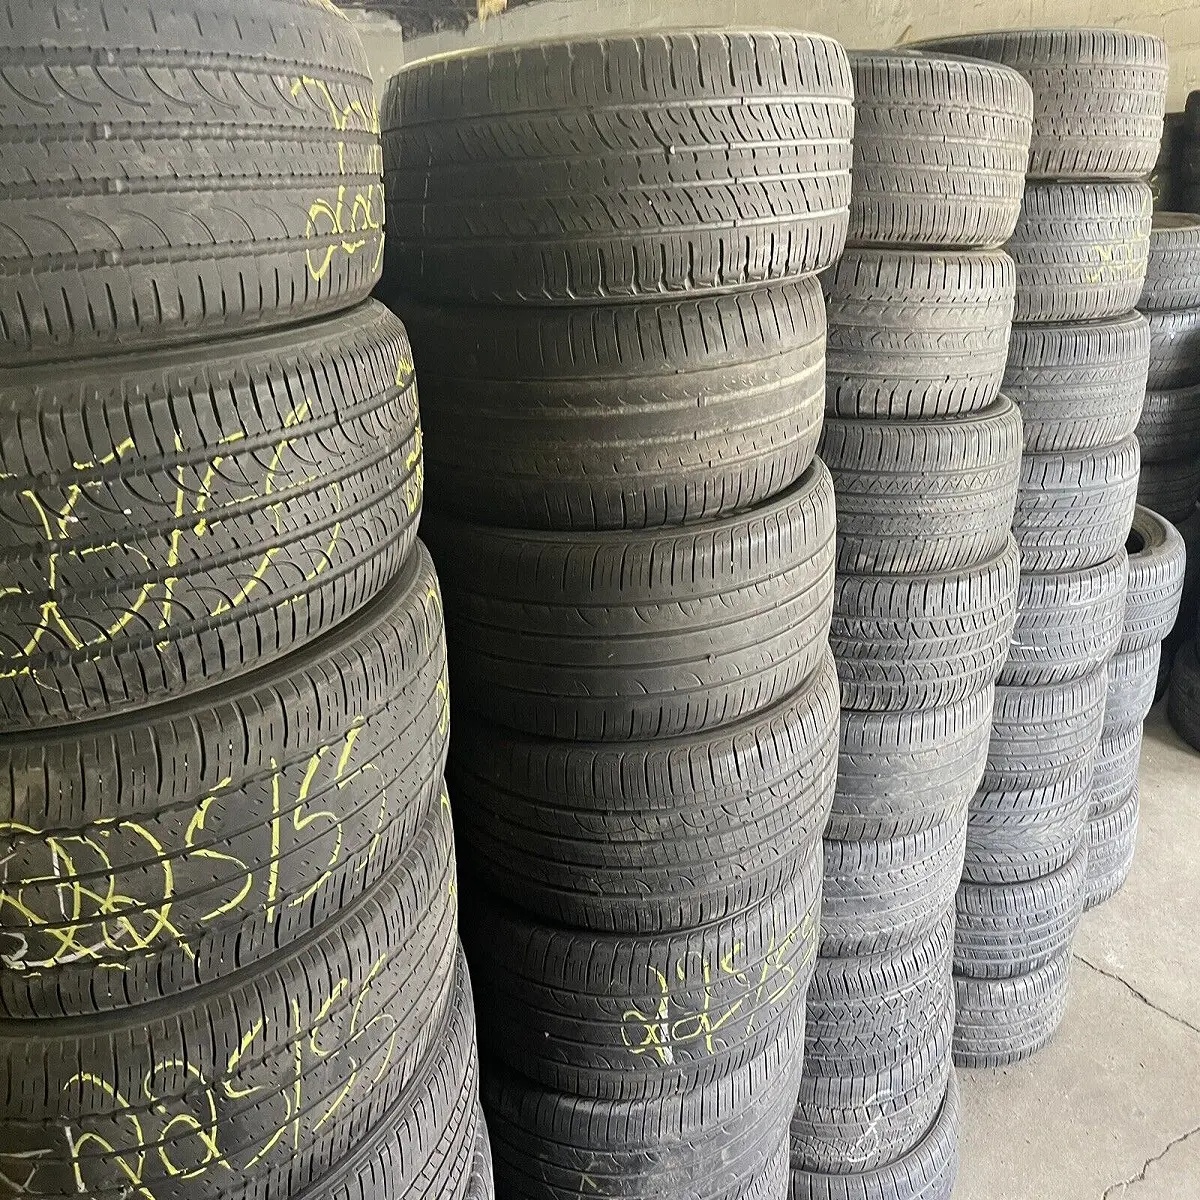 Venta al por mayor de neumáticos de coche baratos en Europa comprar neumáticos usados baratos a granel precio barato